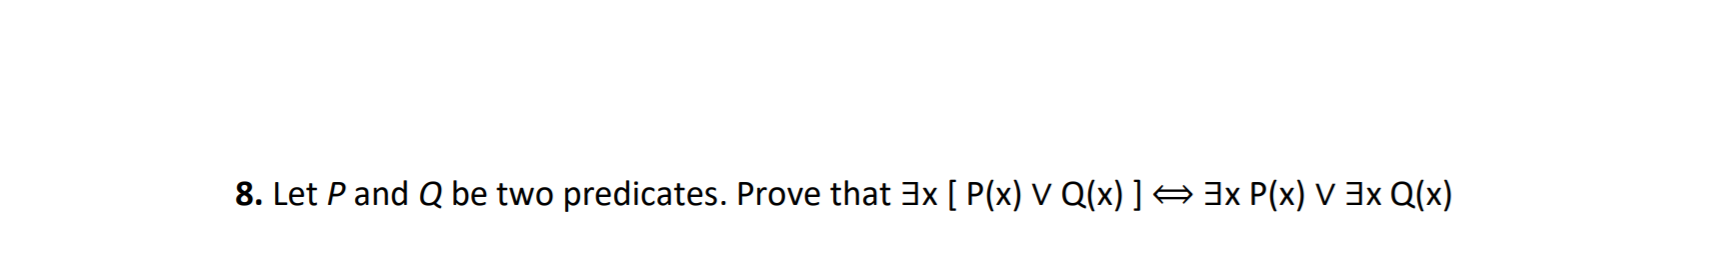 Let Pand Q be two predicates. Prove that 3x [ P(x) V Q(x) ] 3x P(x) V 3x Q(x)
